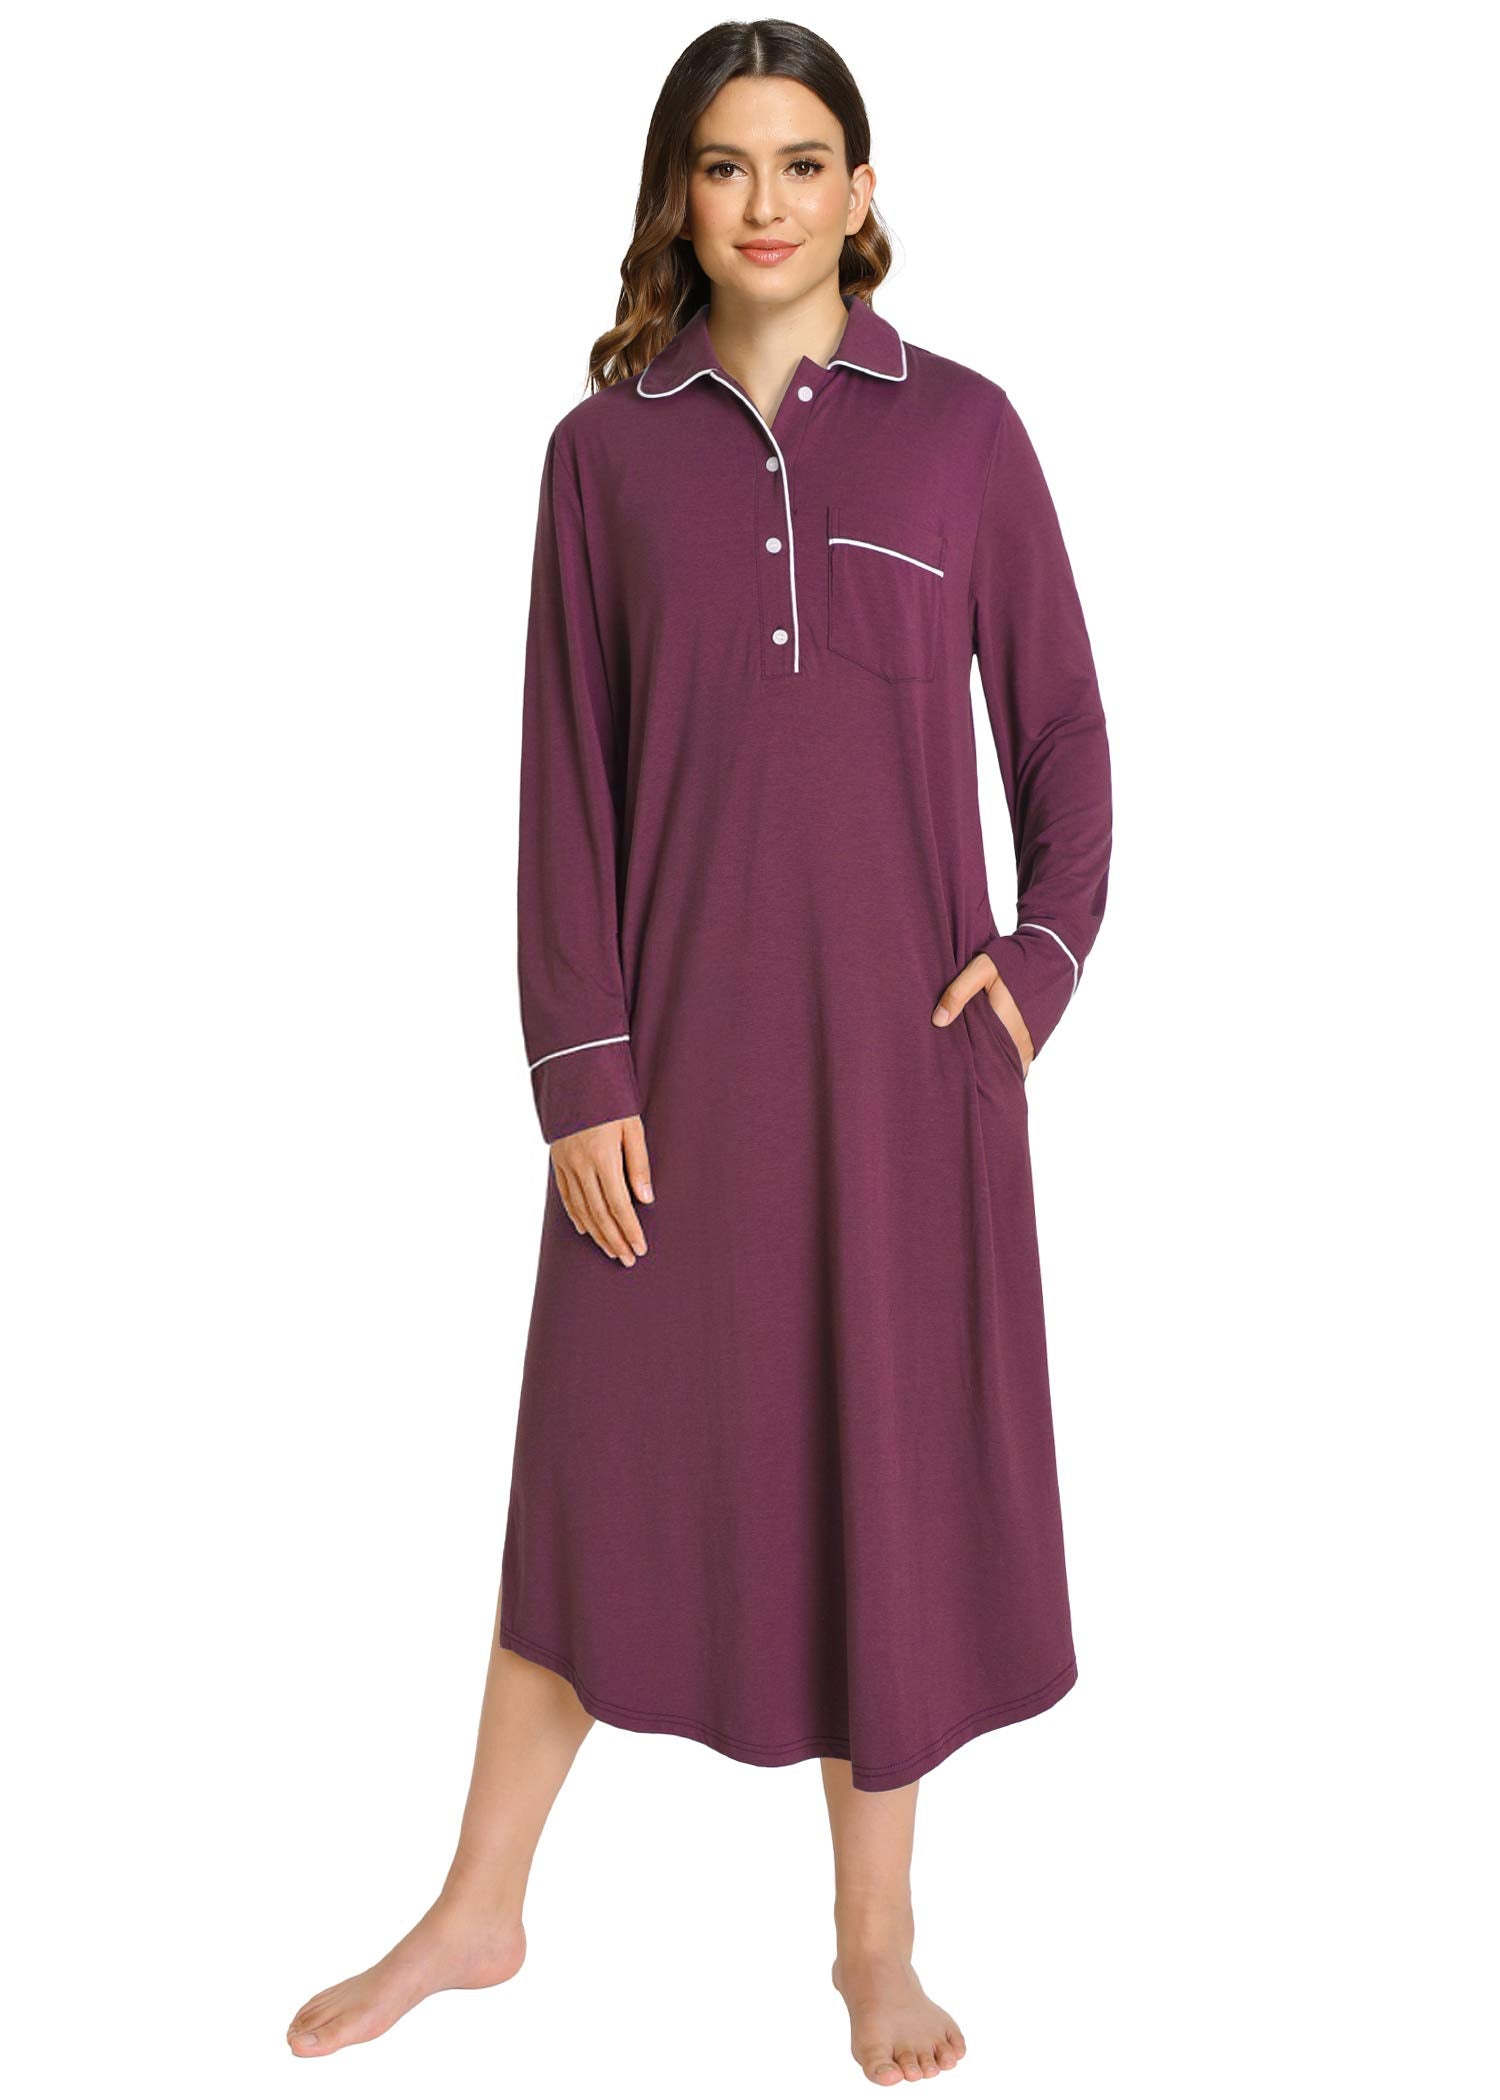 Women's Button Down Sleep Shirt Long Sleeves Nightgown